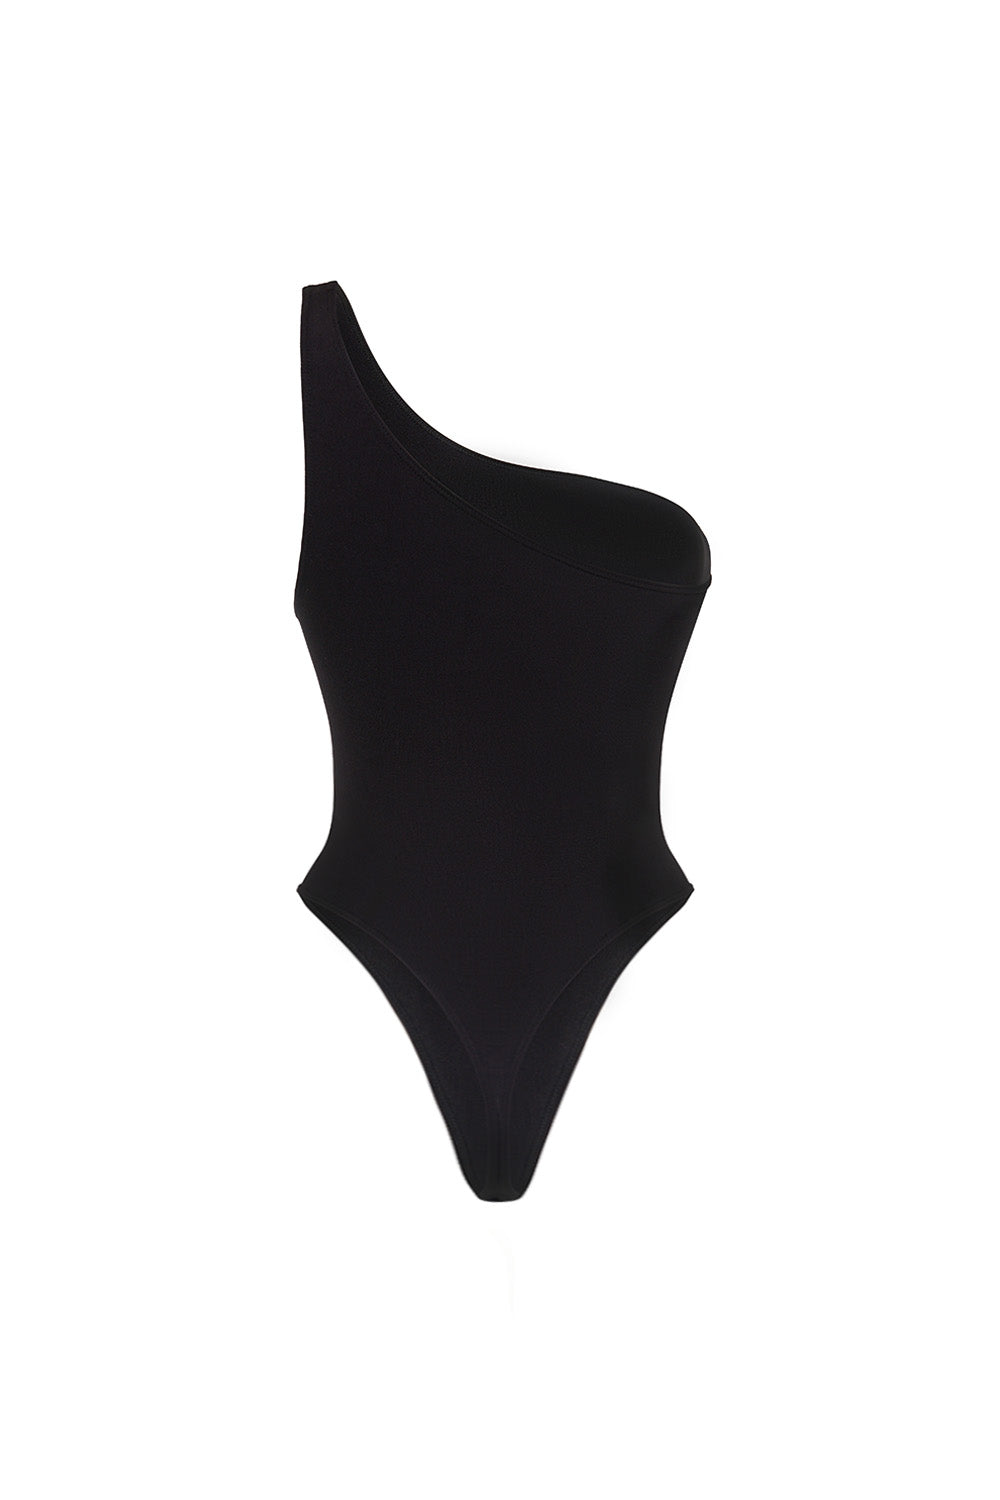 Bodysuit №258 SUPER SOFT Black